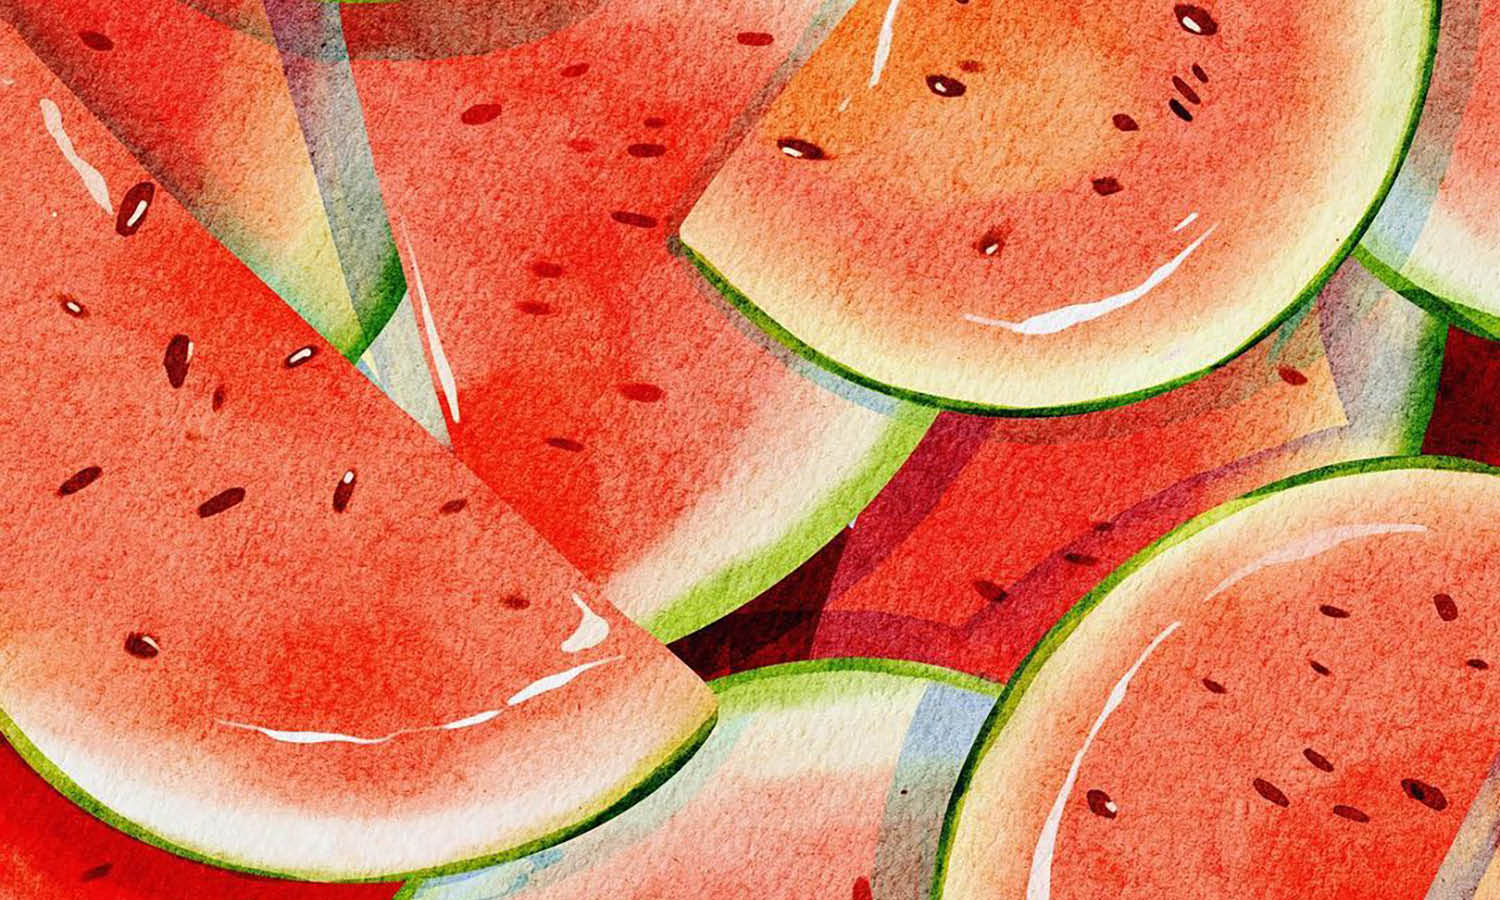 30 Best Watermelon Illustration Ideas You Should Check